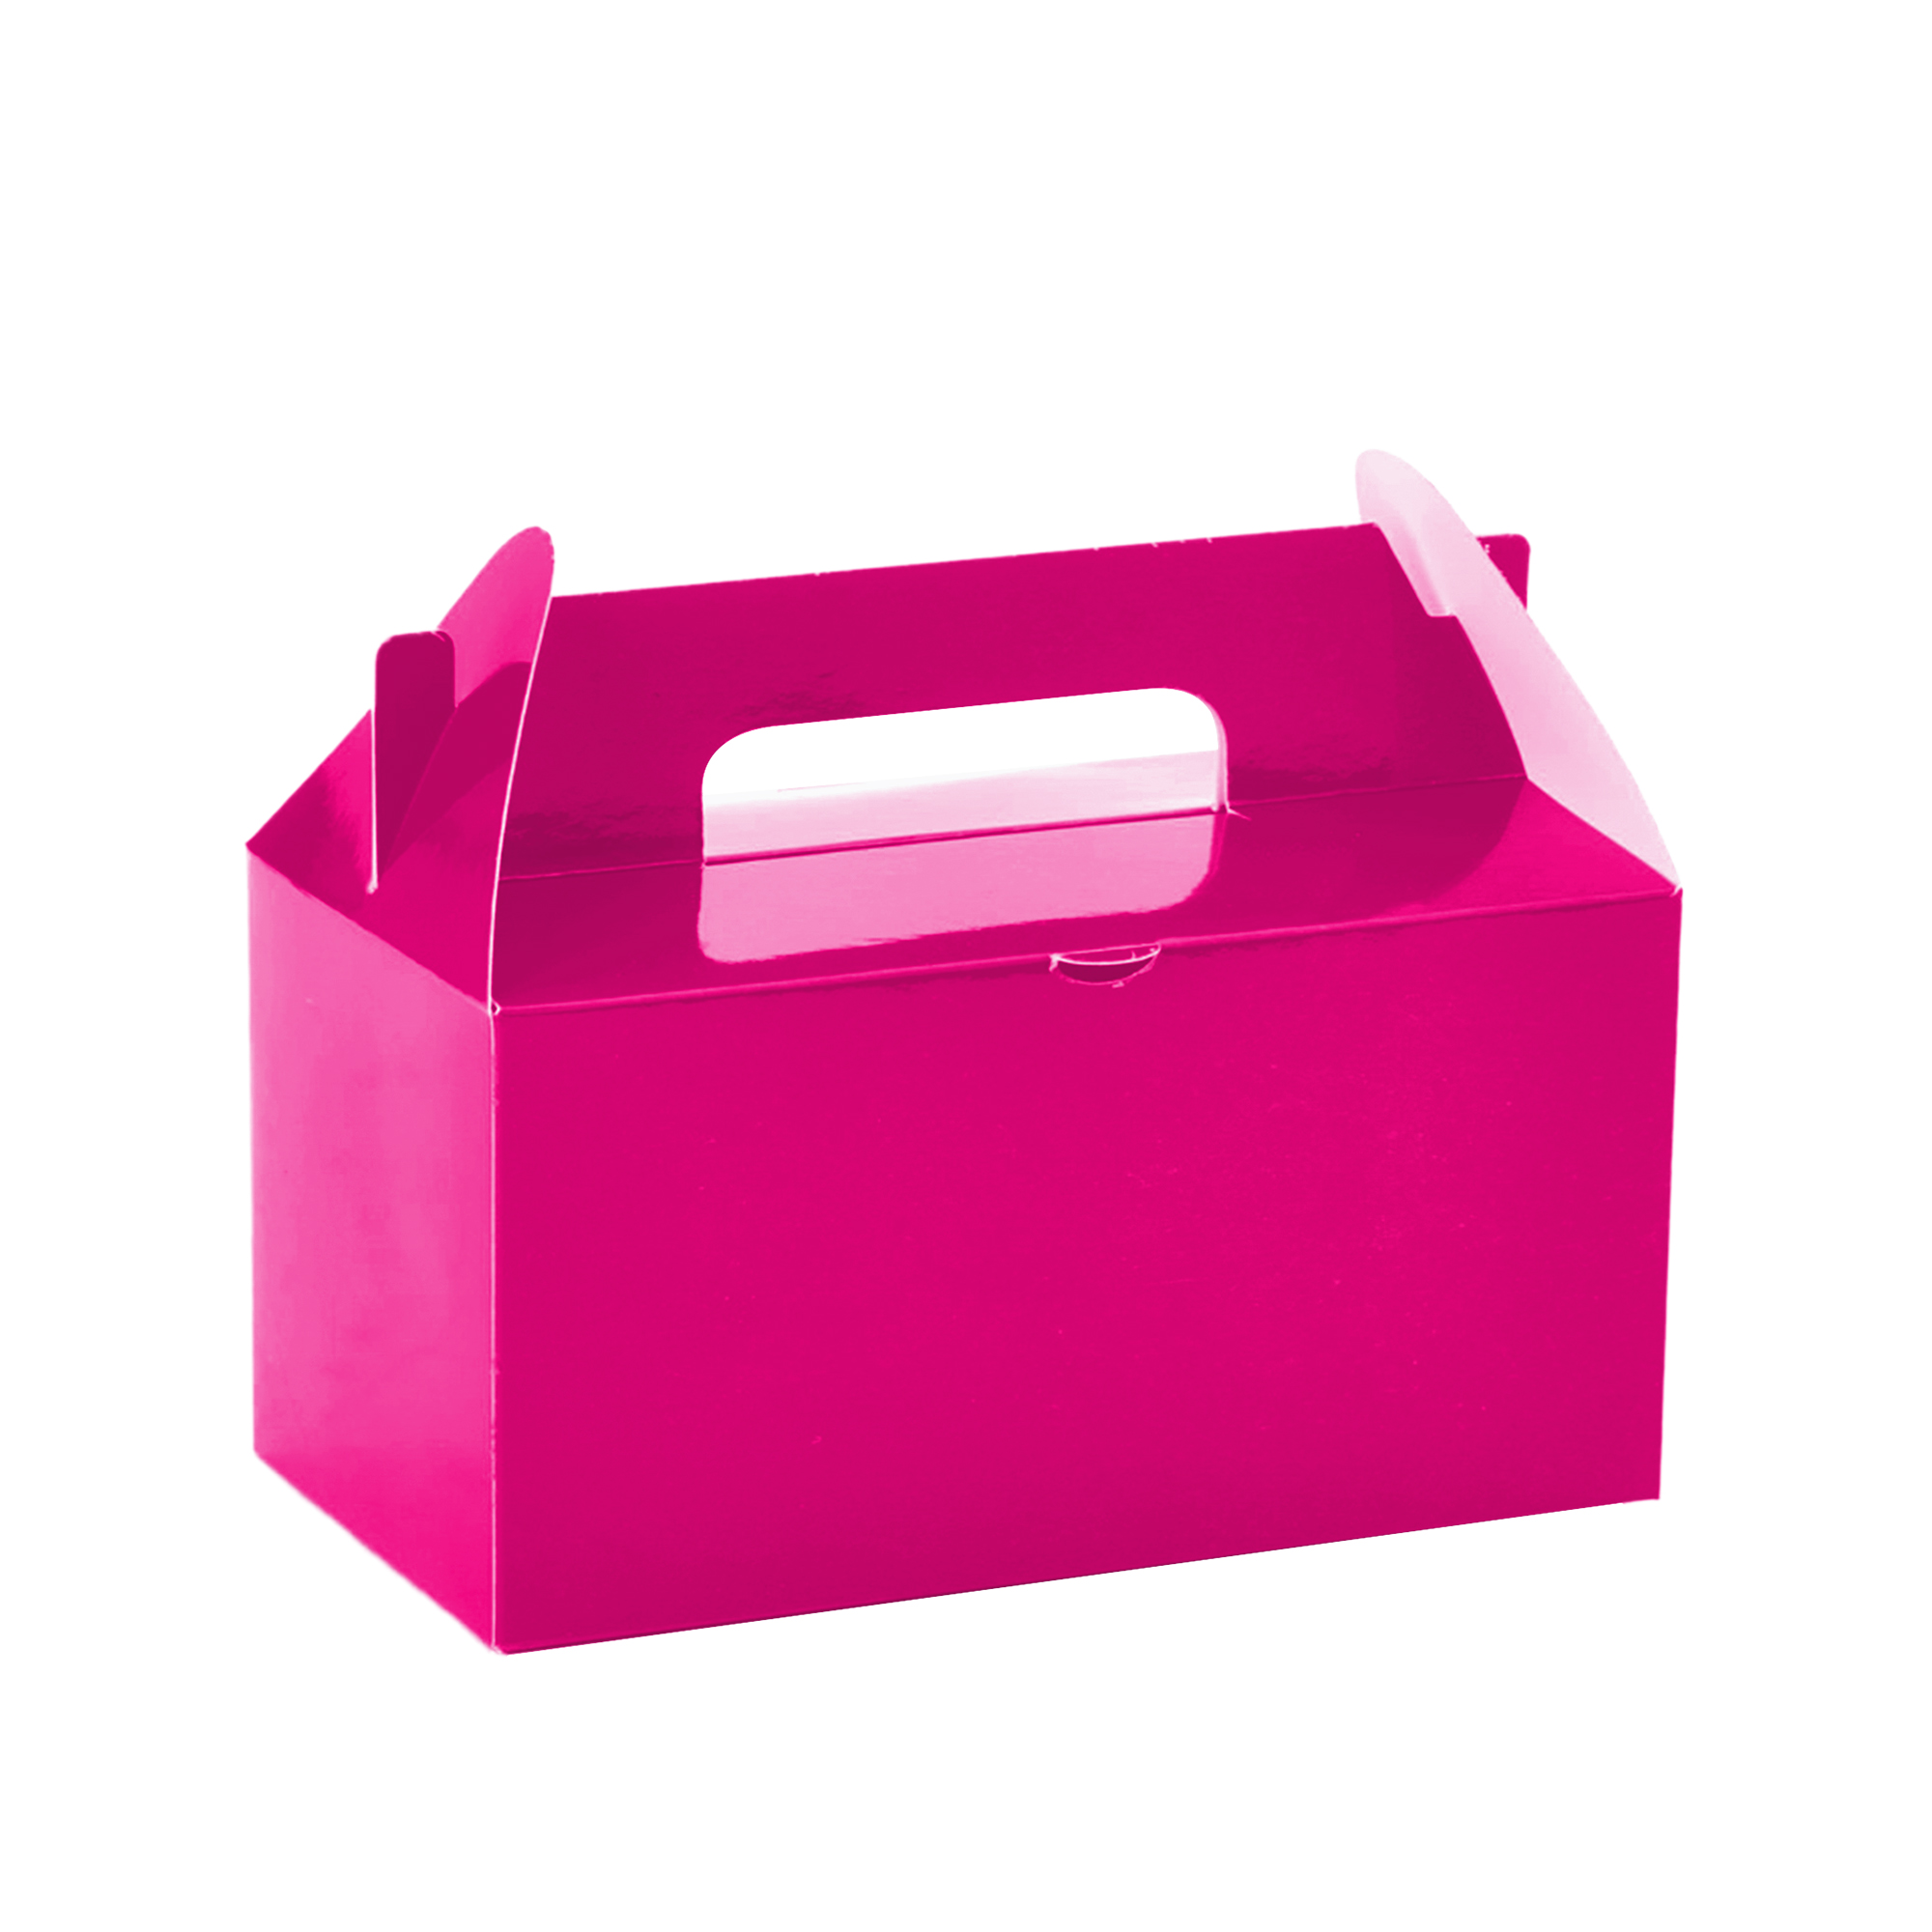 Takeout Box 12pcs/bag - Fuchsia